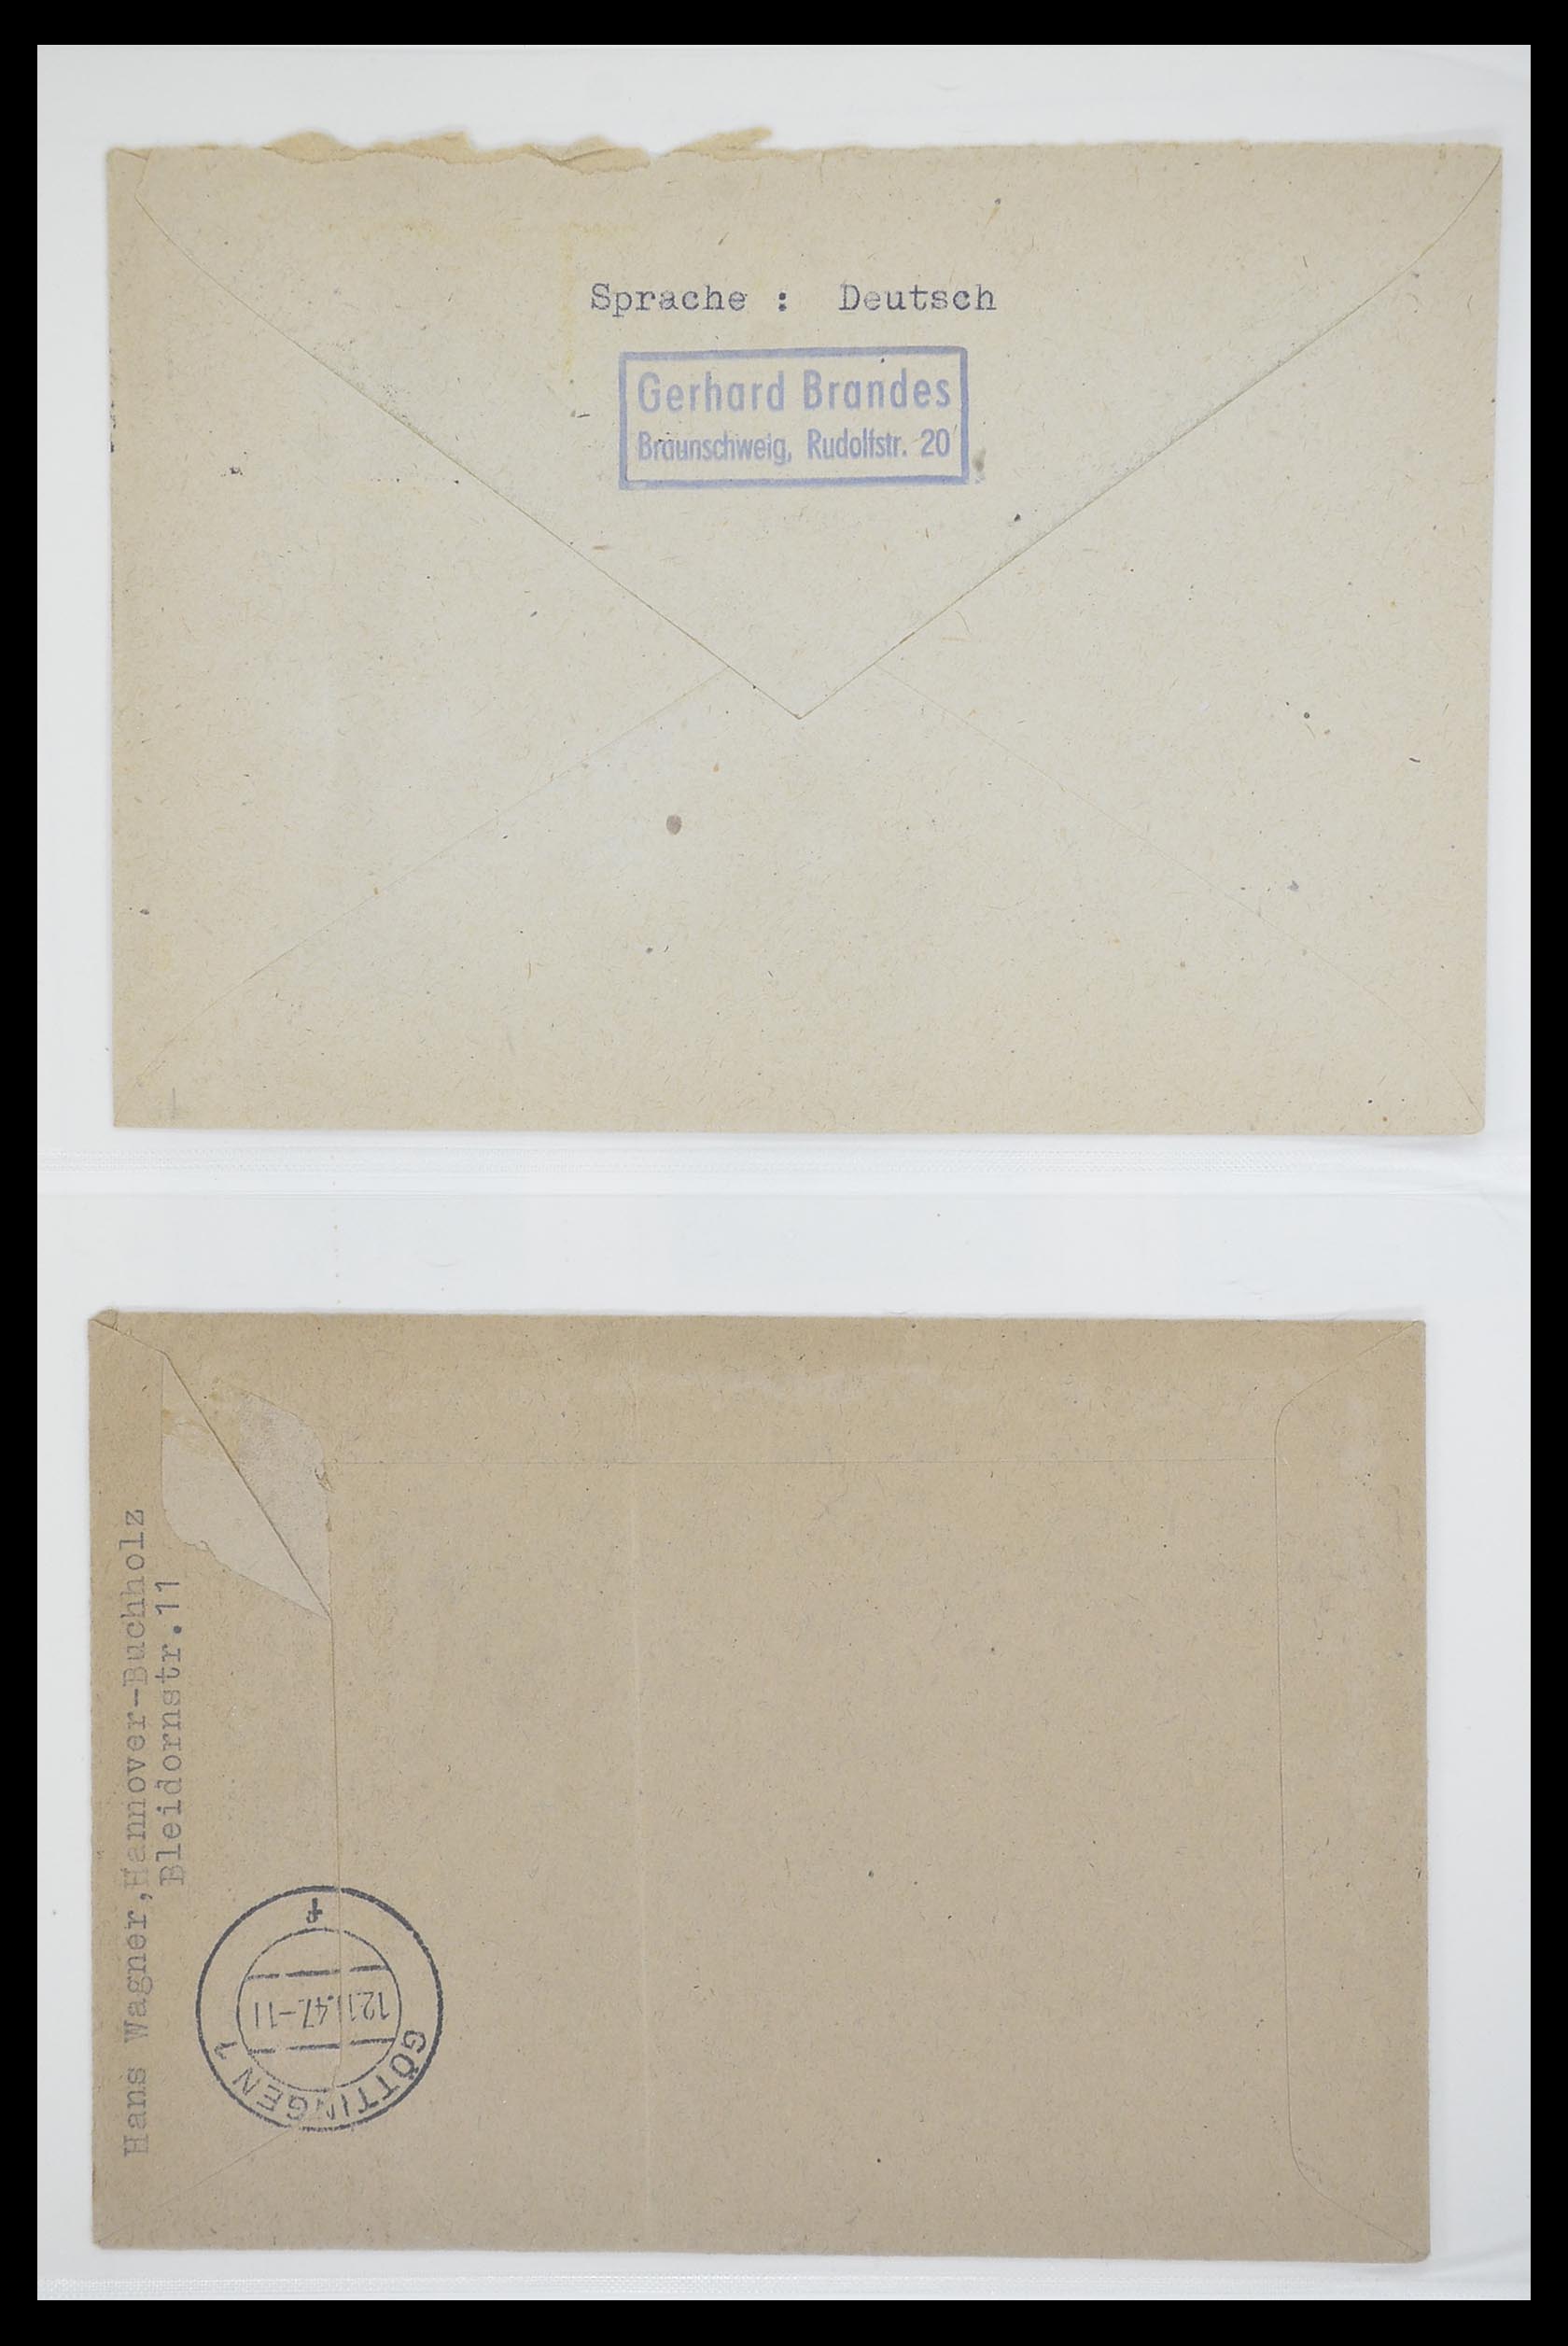 33837 032 - Stamp collection 33837 German Zones 1945-1948.